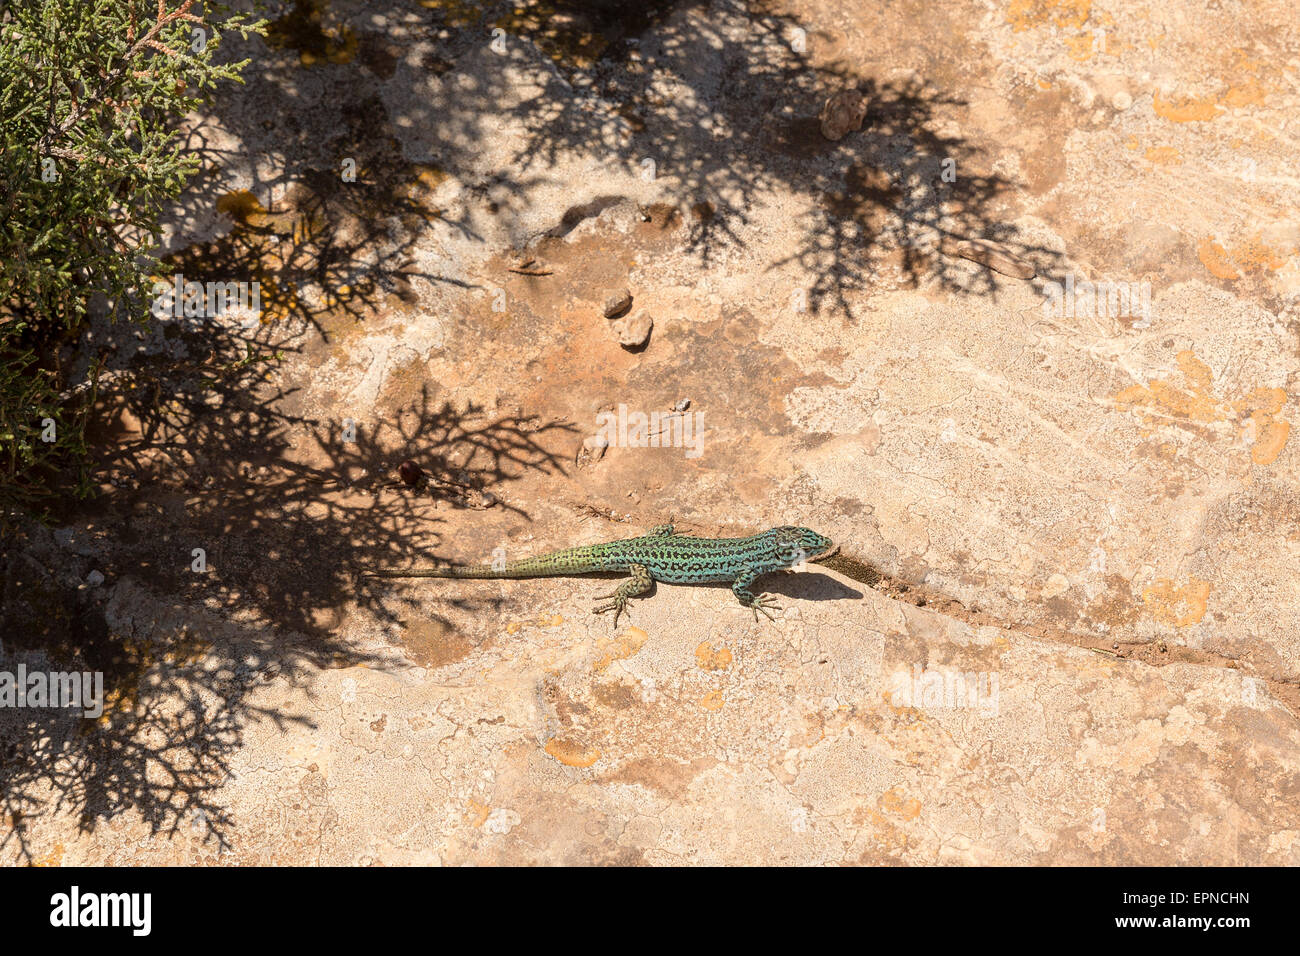 formentera lizard Podarcis pityusensis formenterae. Endemic Lizard Island Stock Photo